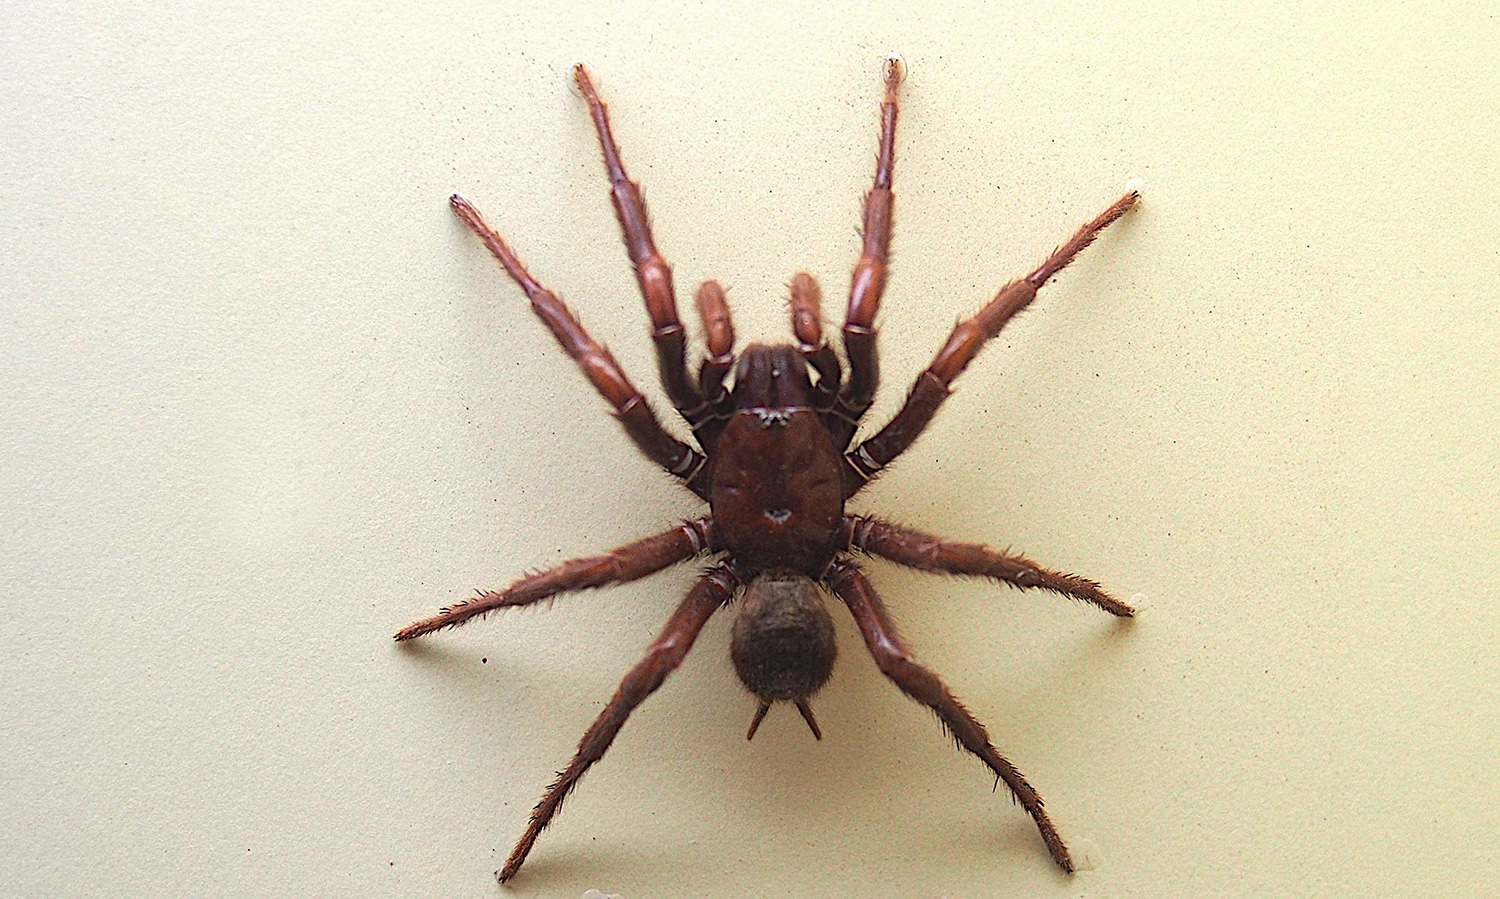 Male funnel web spider. Photo credit: Sputniktilt  via commons.wikimedia.org / CC BY-SA 3.0